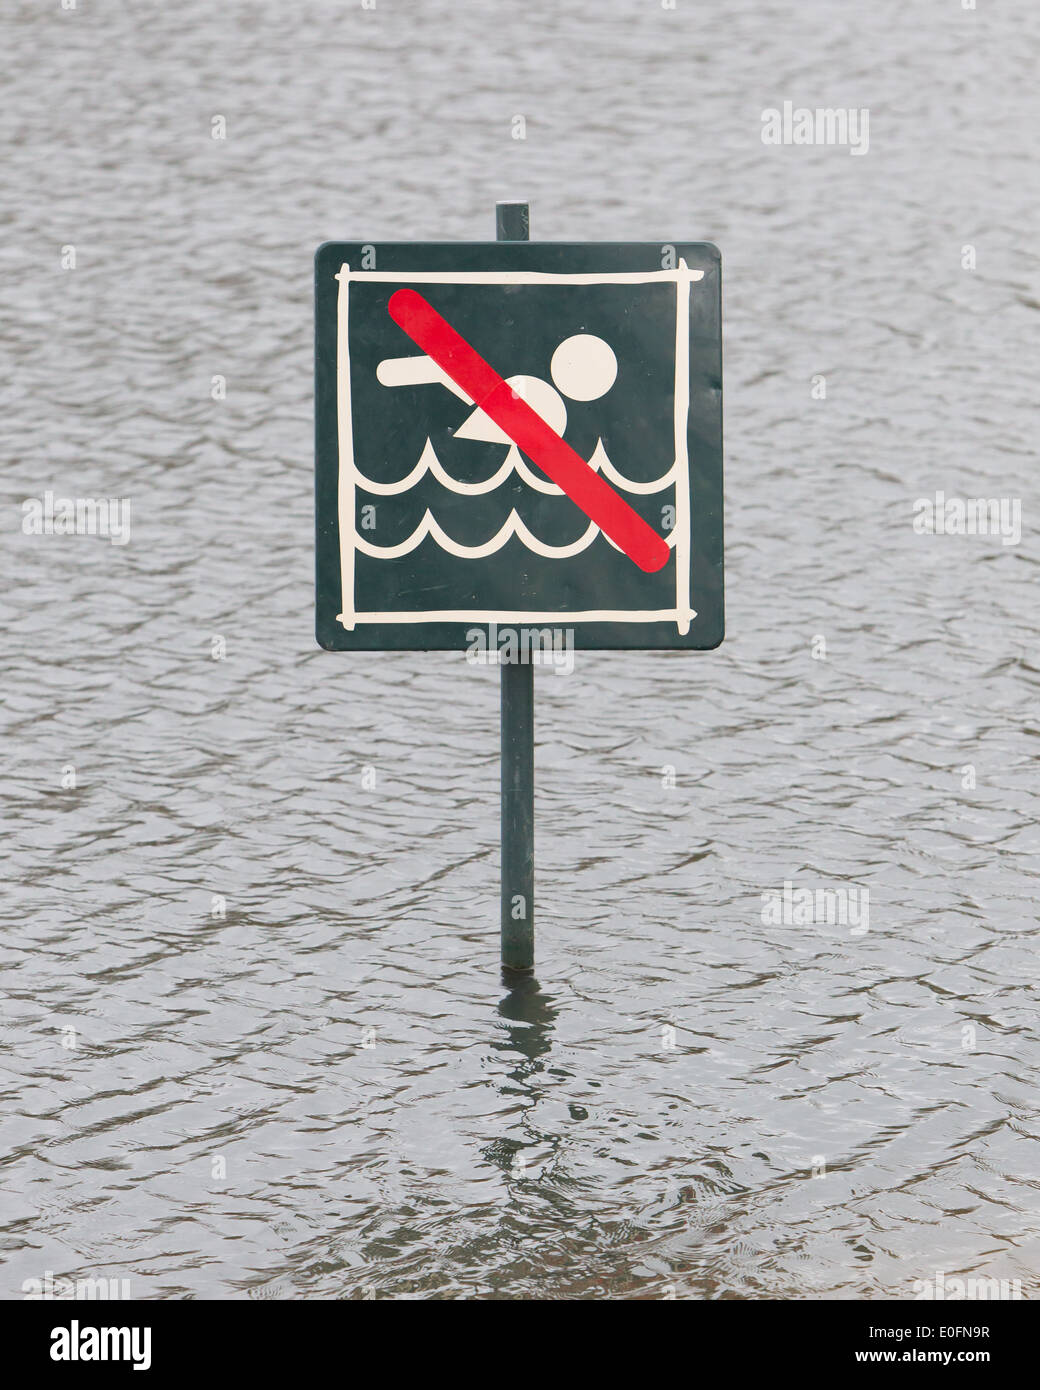 Warning sign at a lake, Caution No Swimming allowed Stock Photo